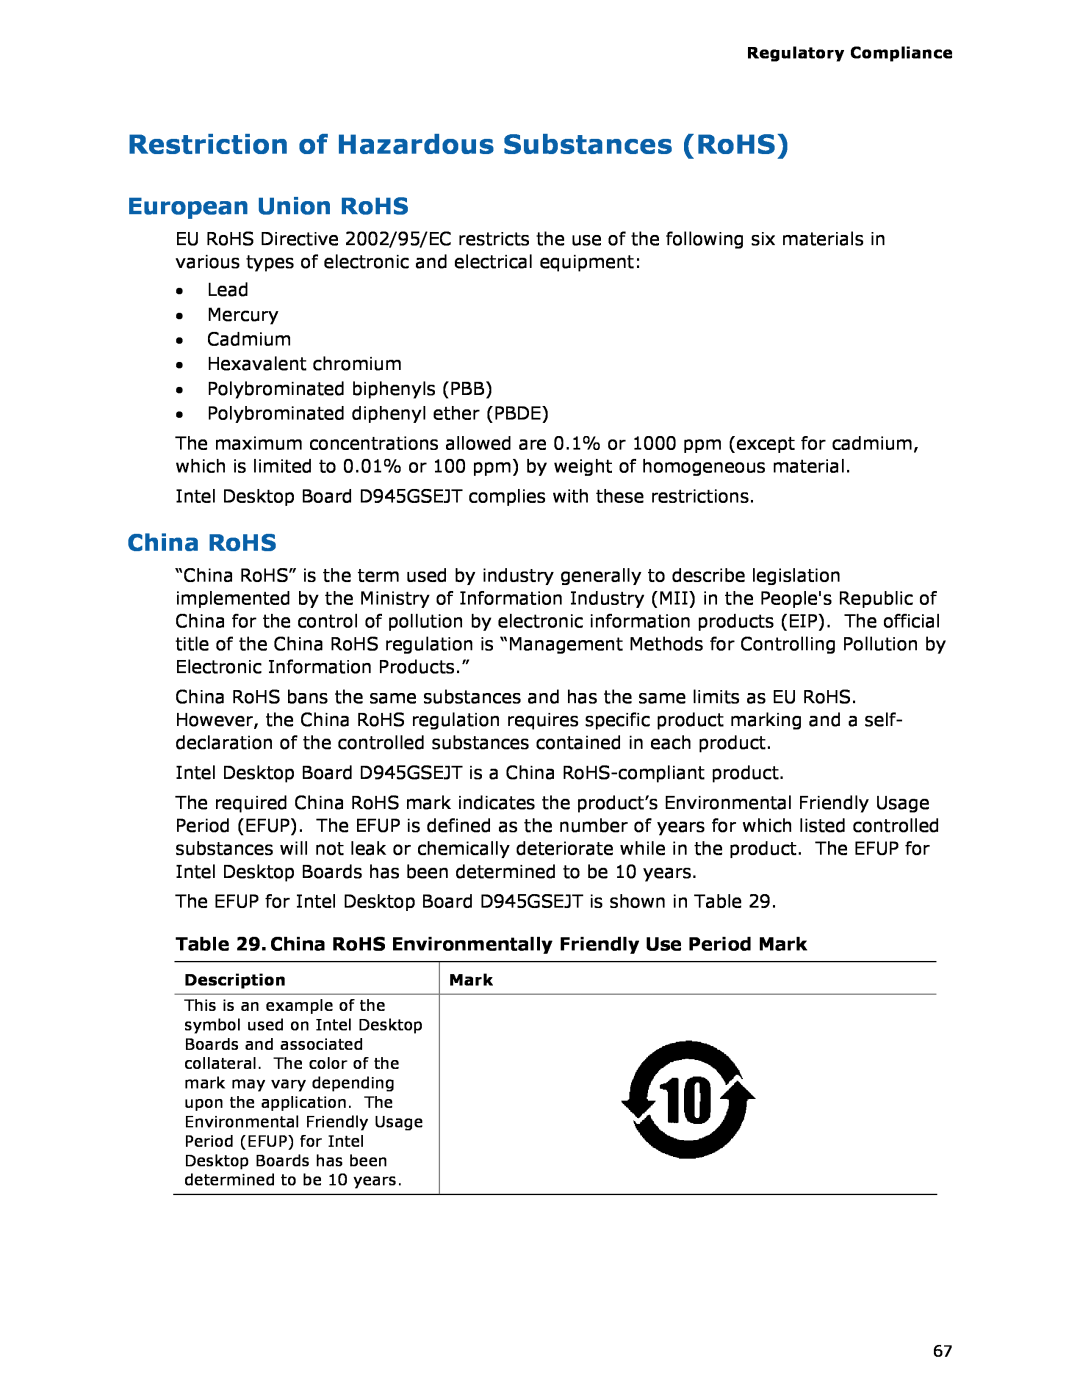 Intel D945GSEJT manual Restriction of Hazardous Substances RoHS, European Union RoHS, China RoHS 